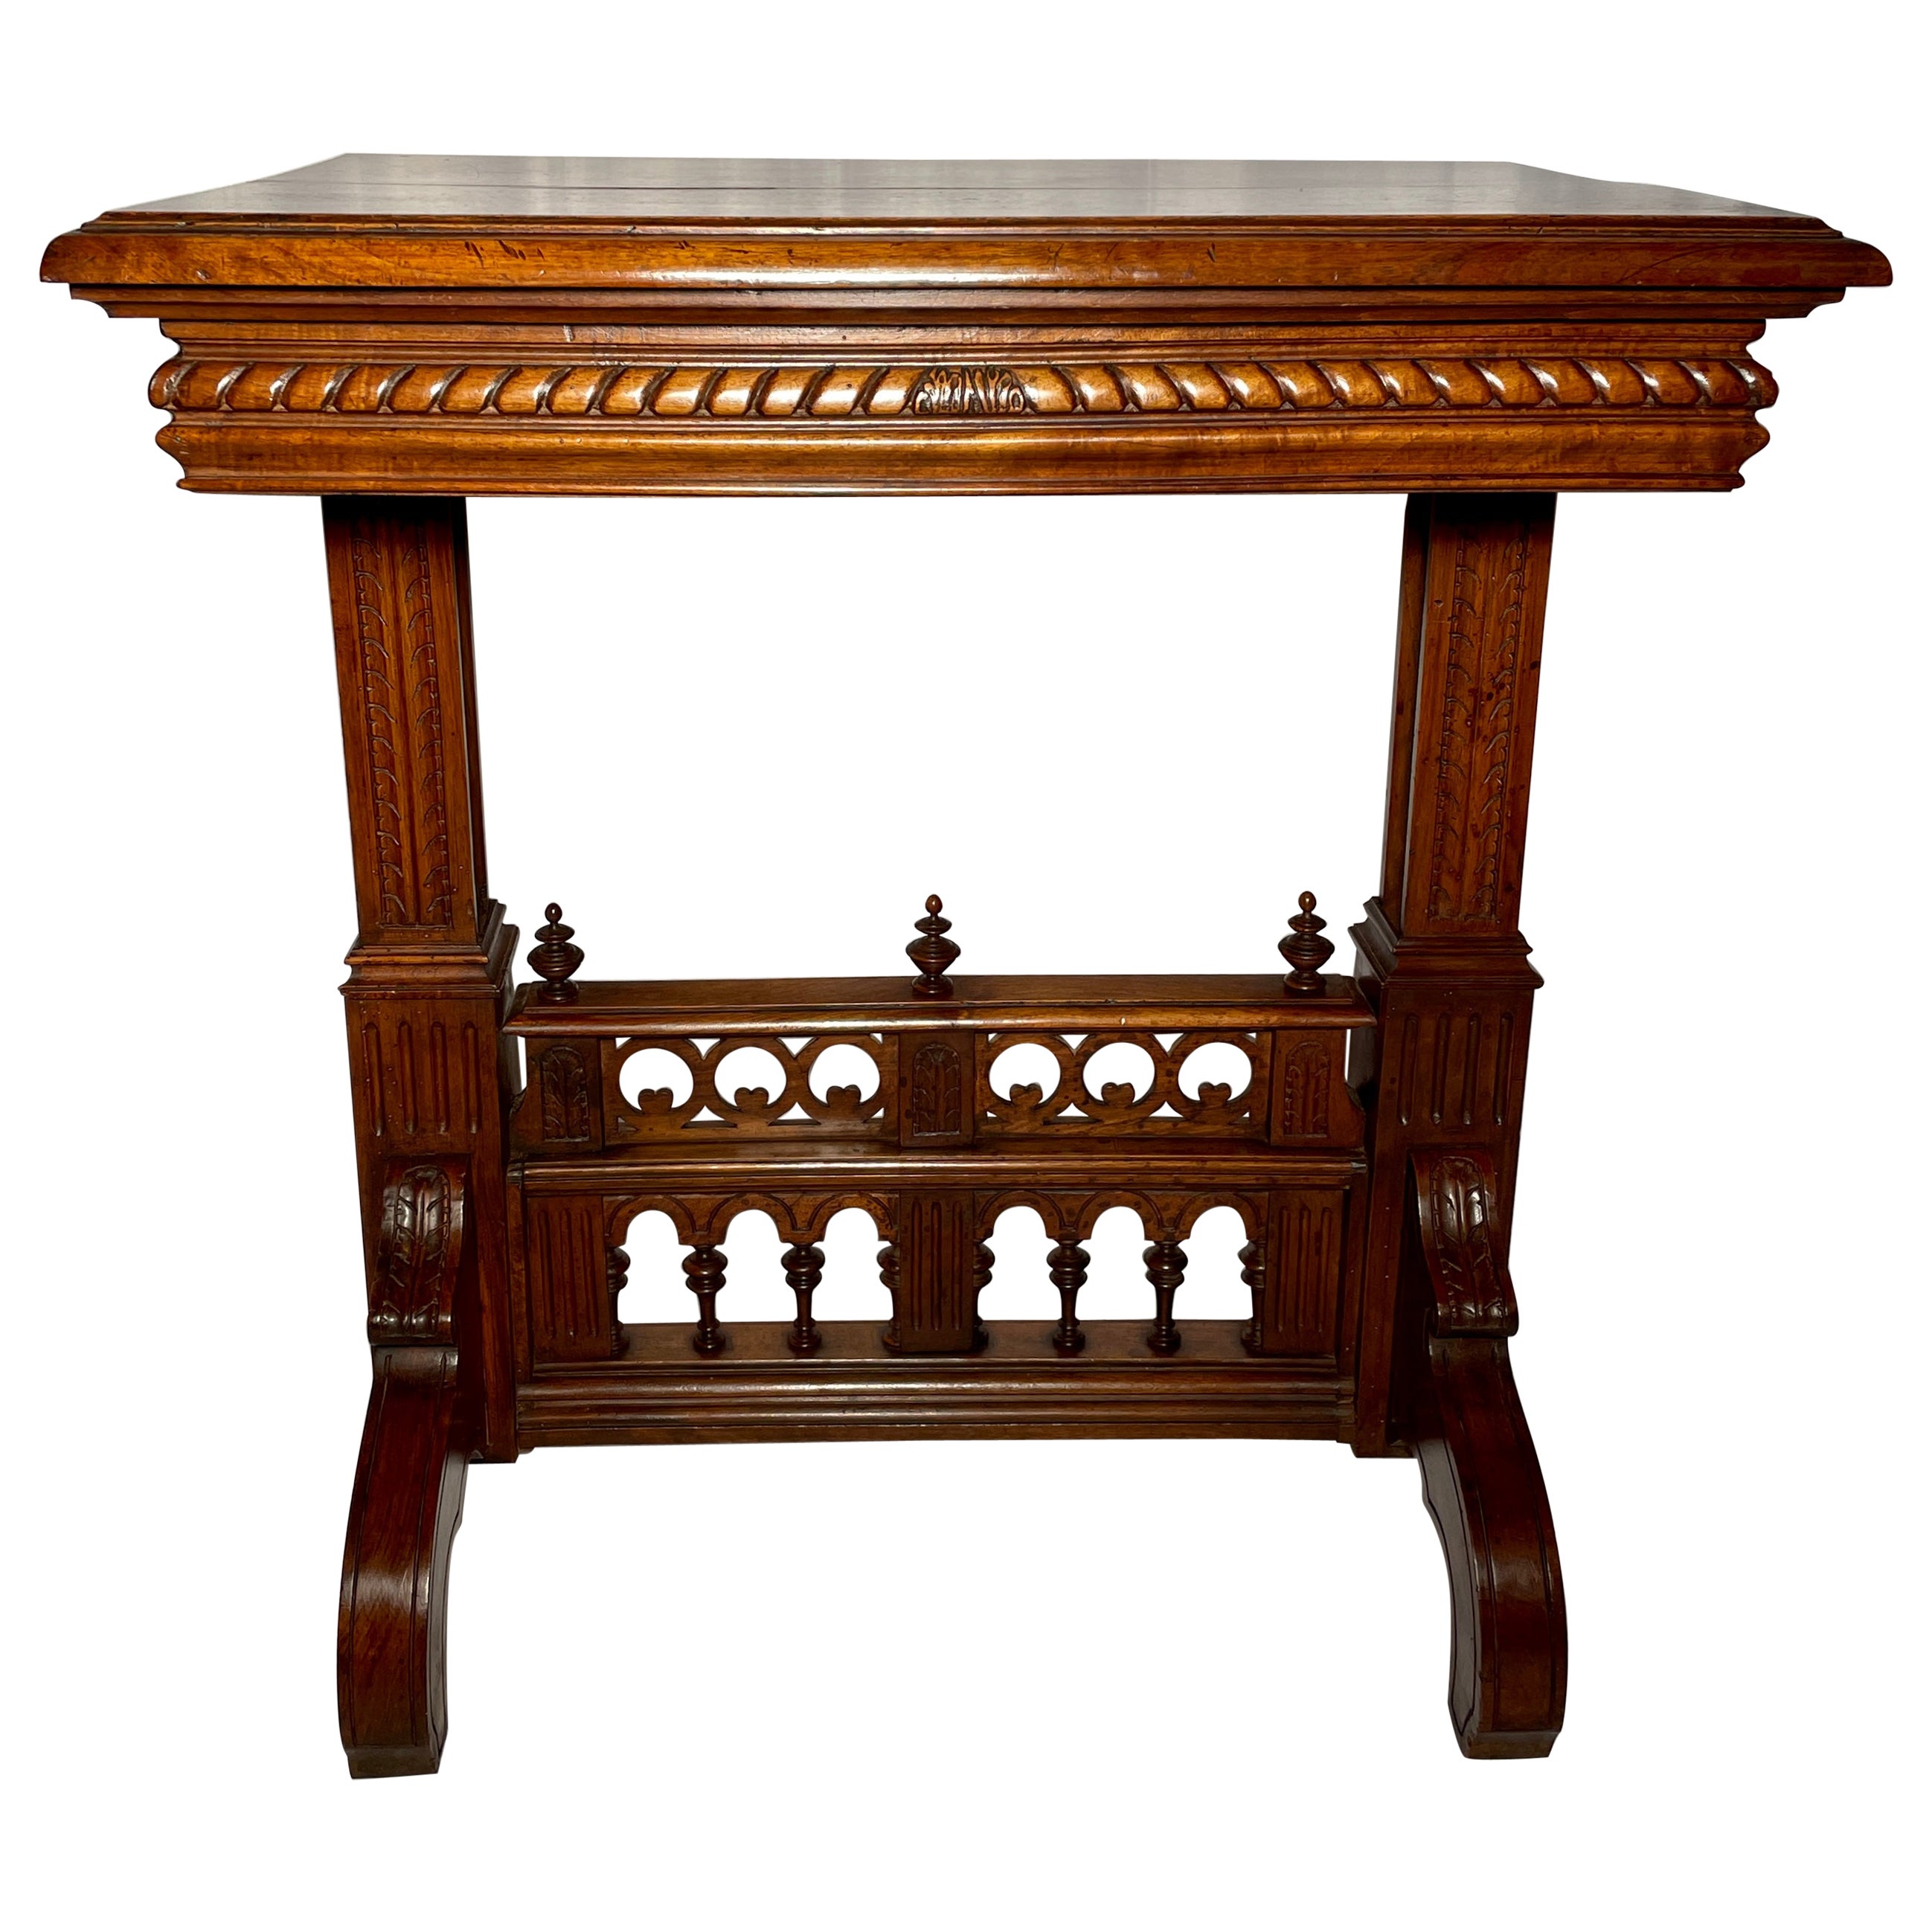 Antique French Renaissance Revival Walnut Table, circa 1890